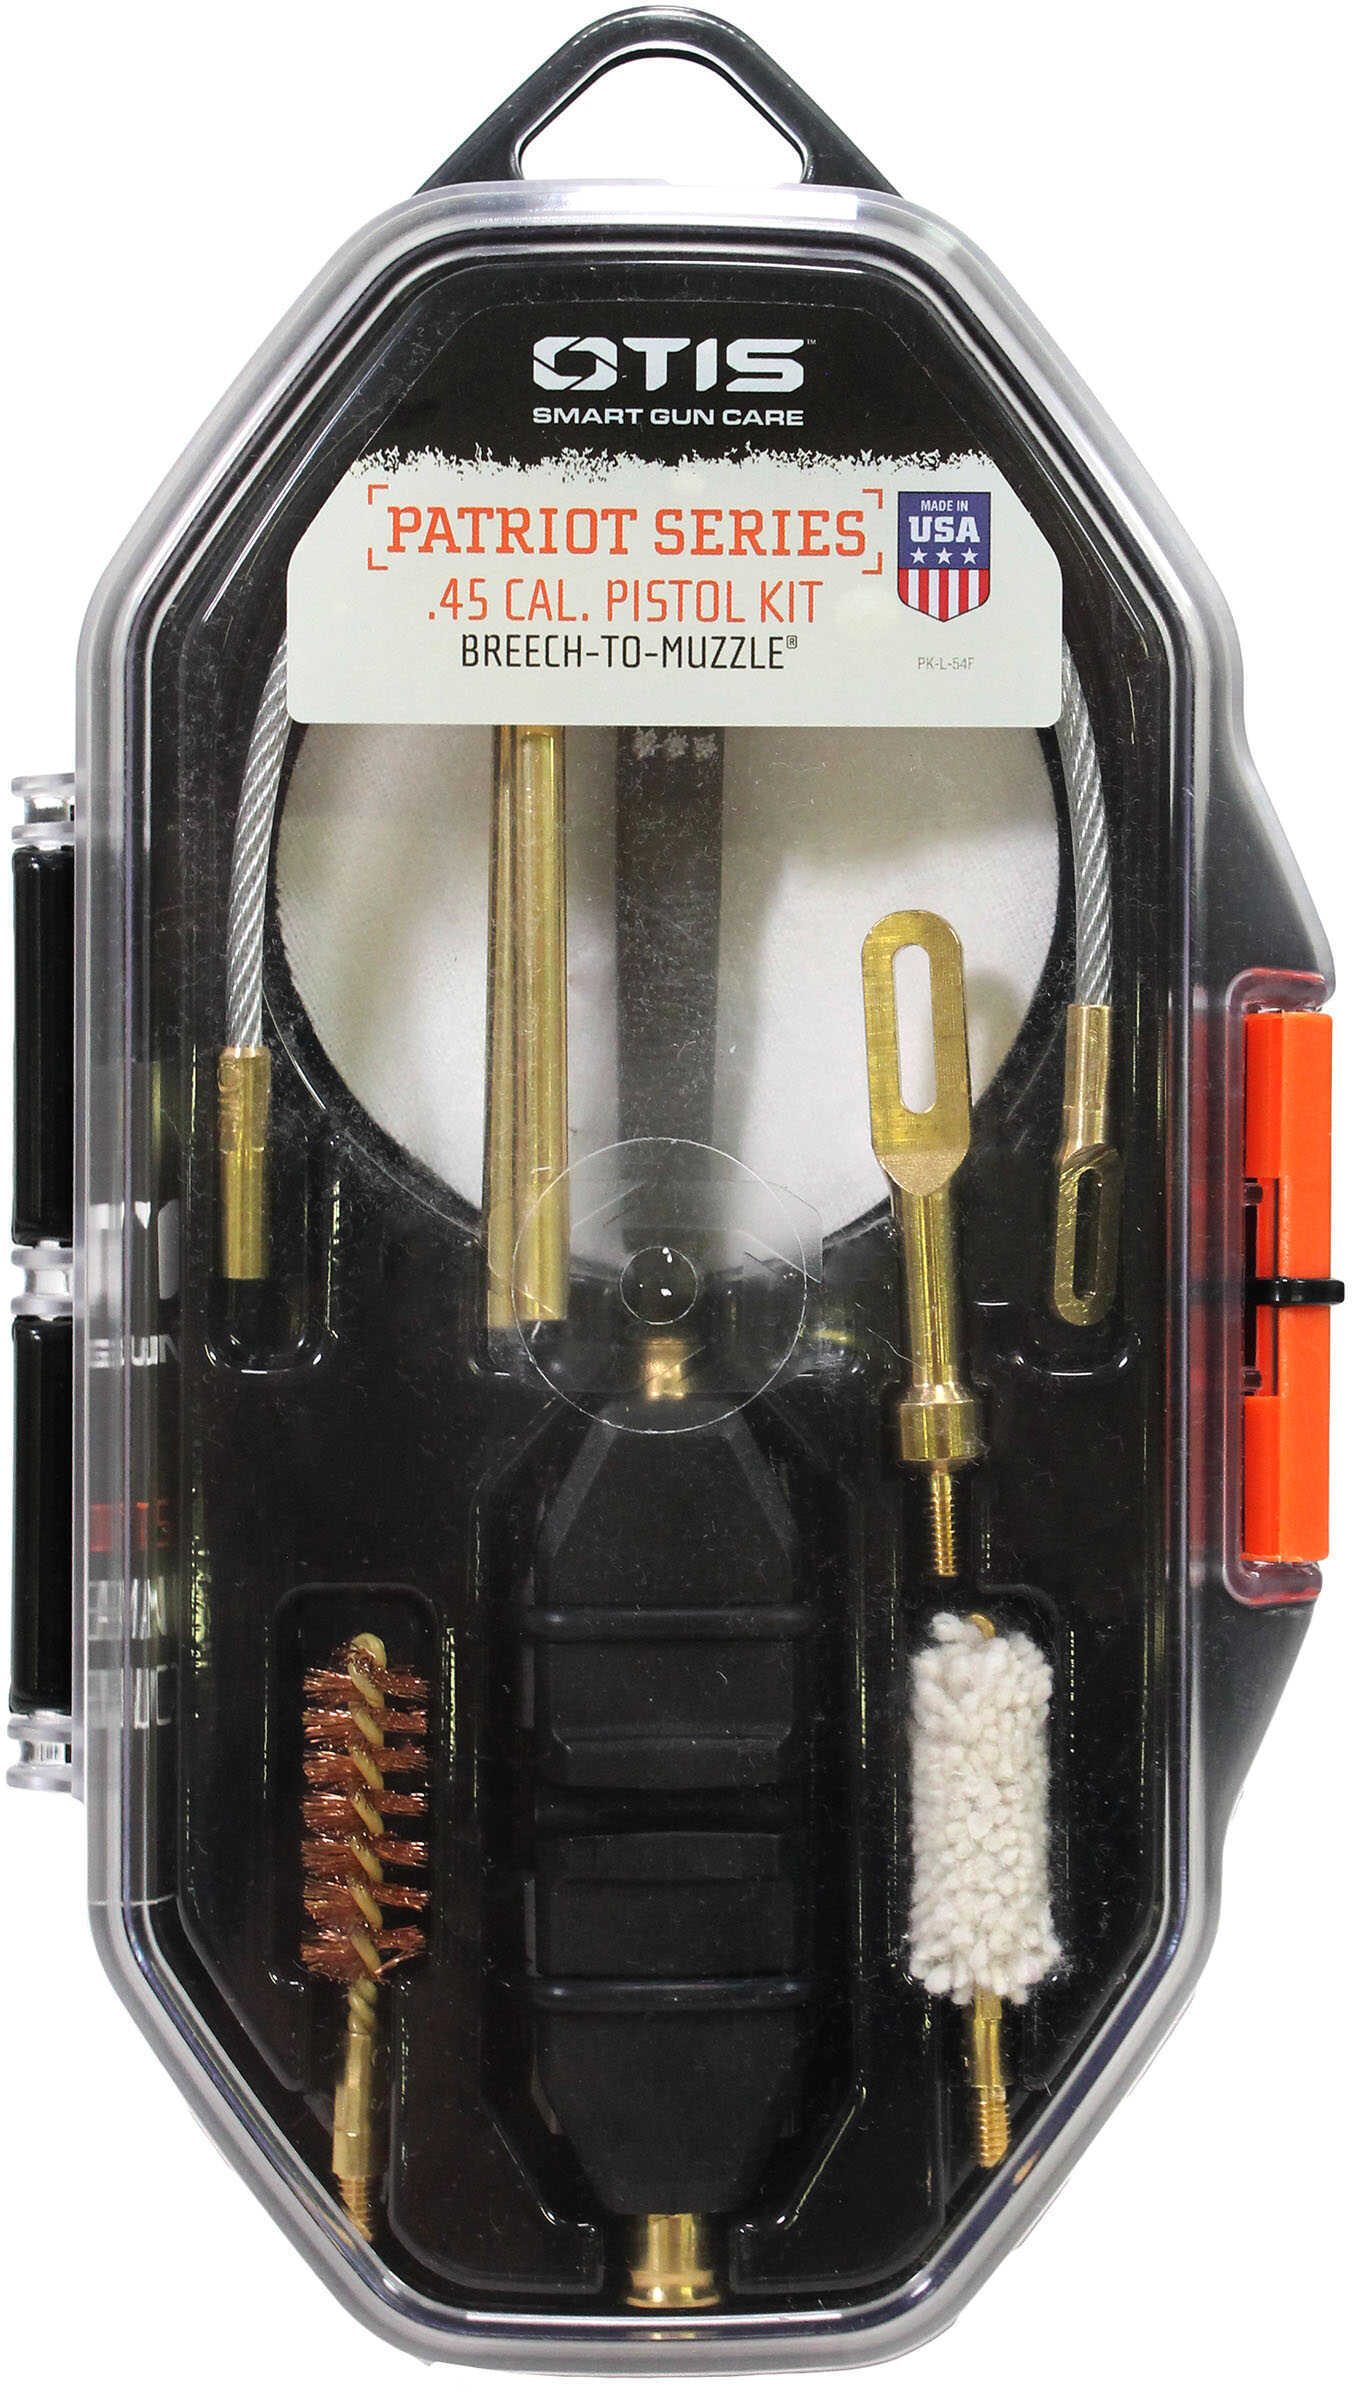 Patriot Series Pistol Kit